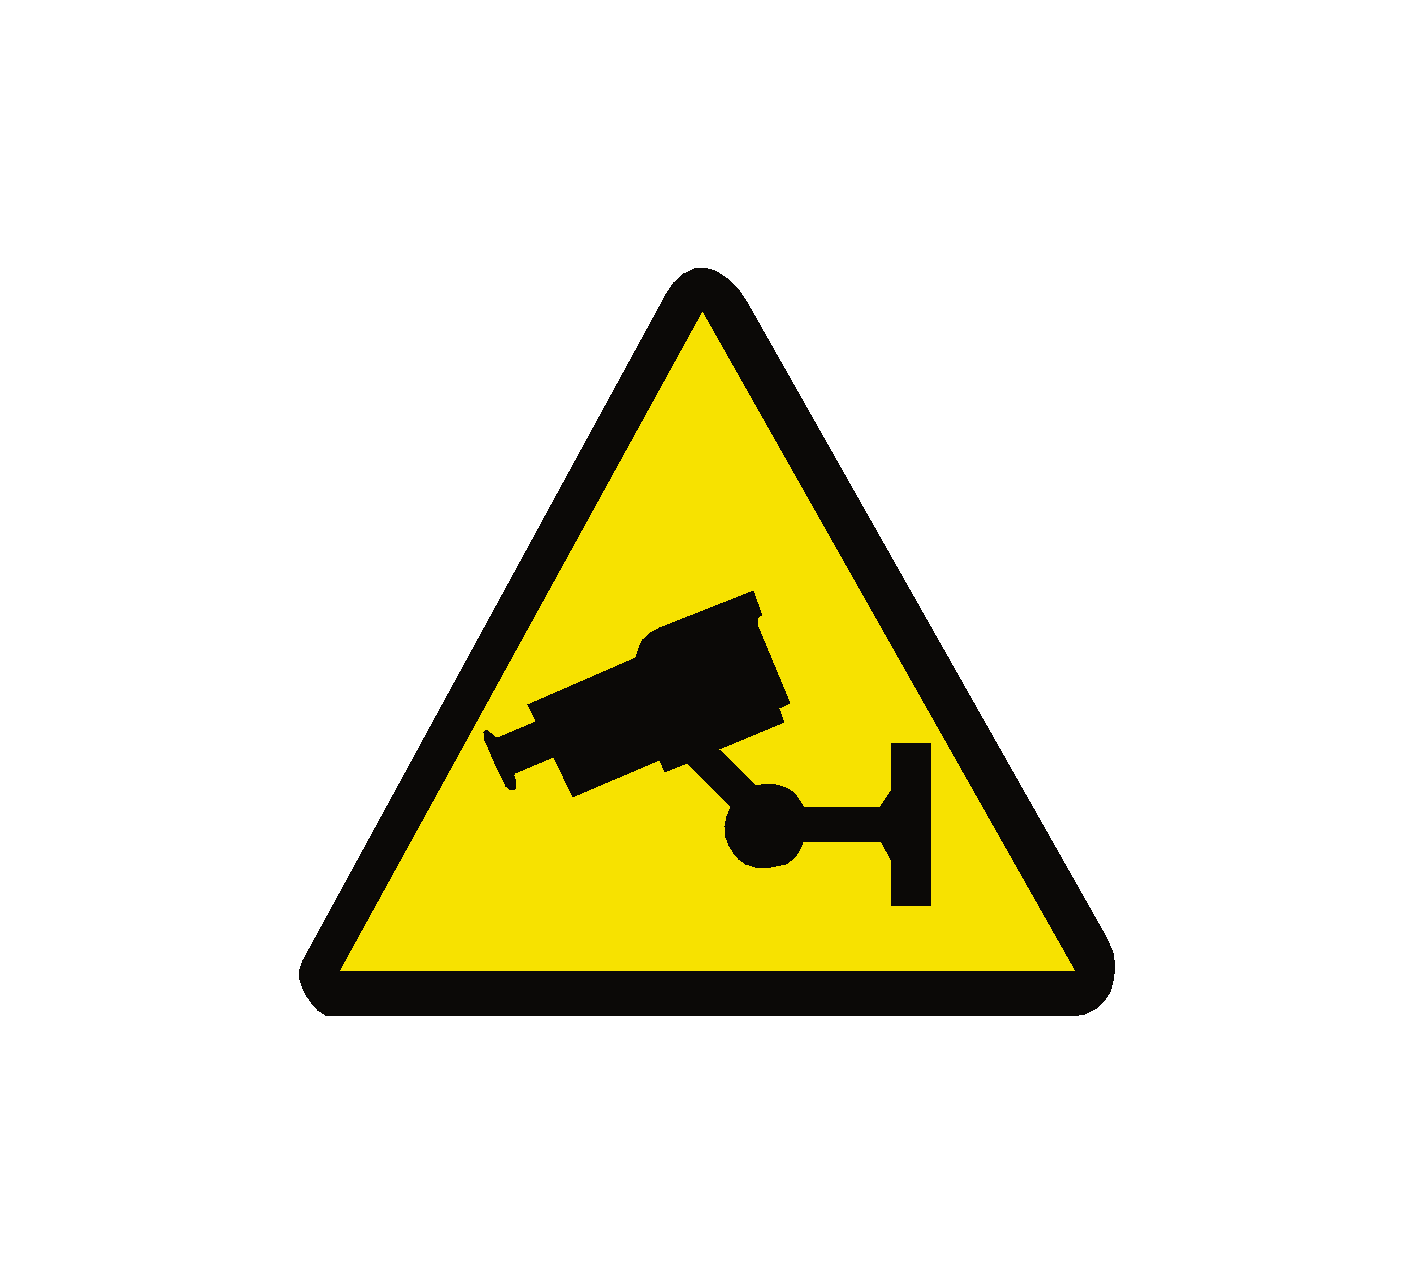 CCTV Warning Signs Law